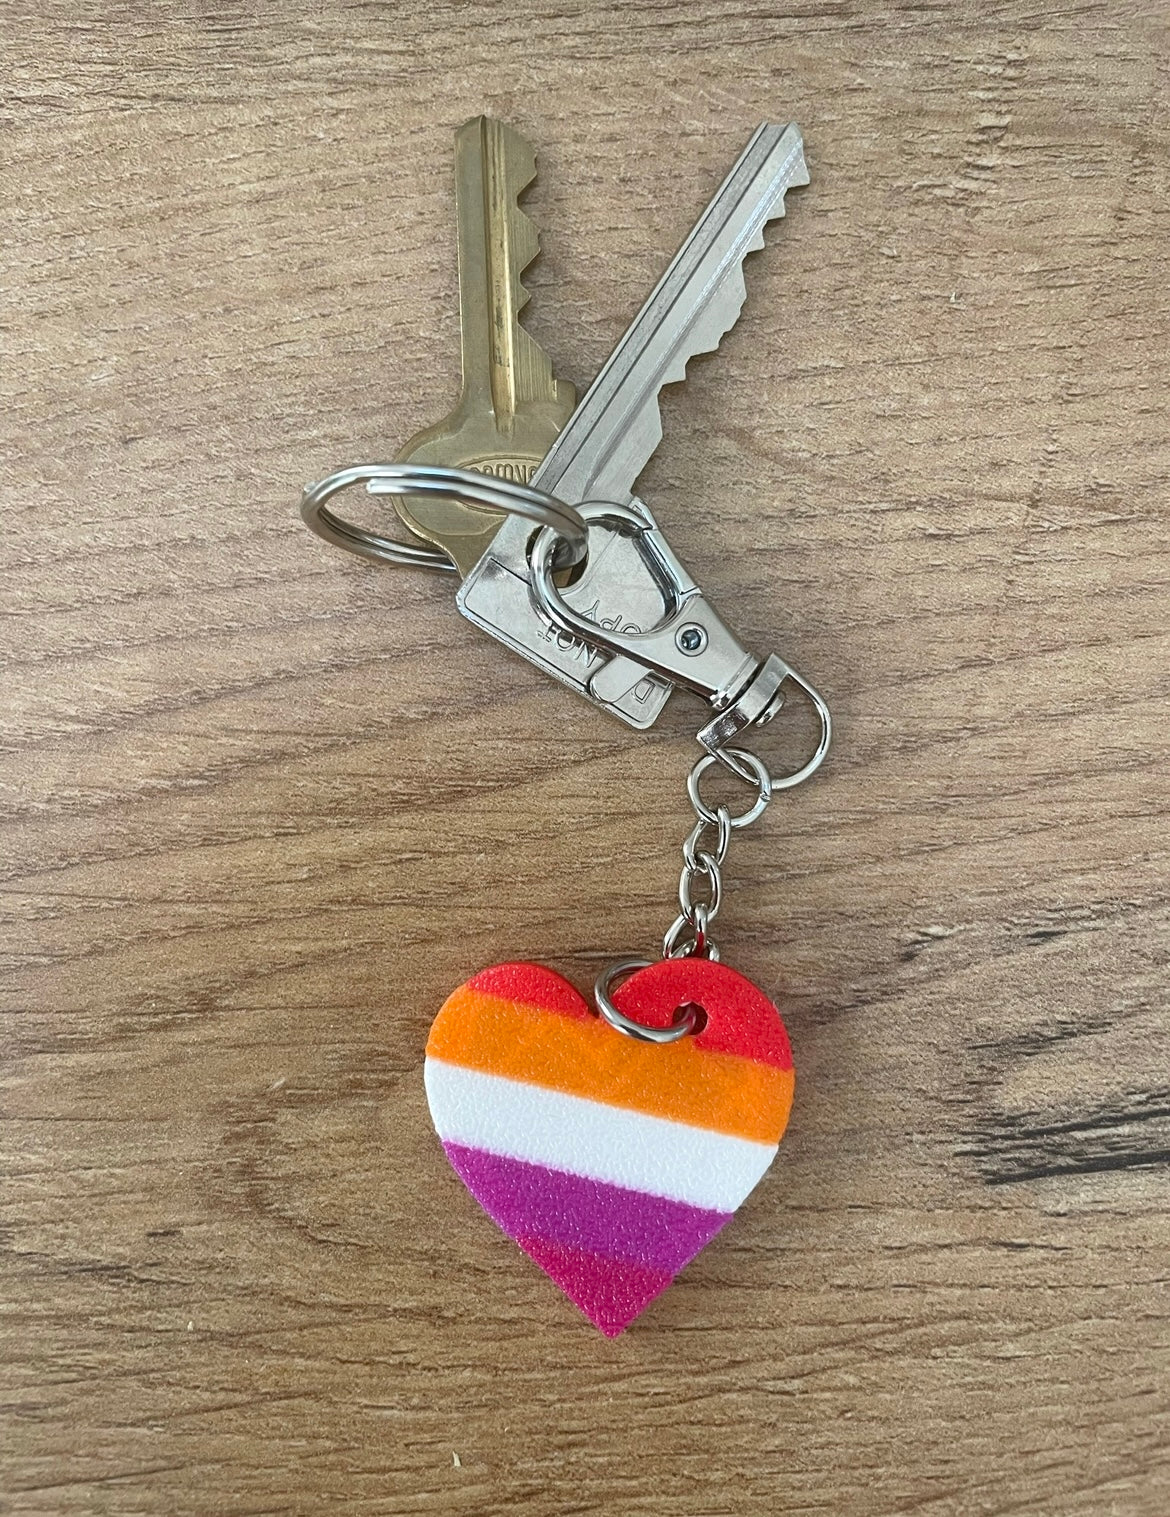 3D Printed Lesbian Heart Key Chain